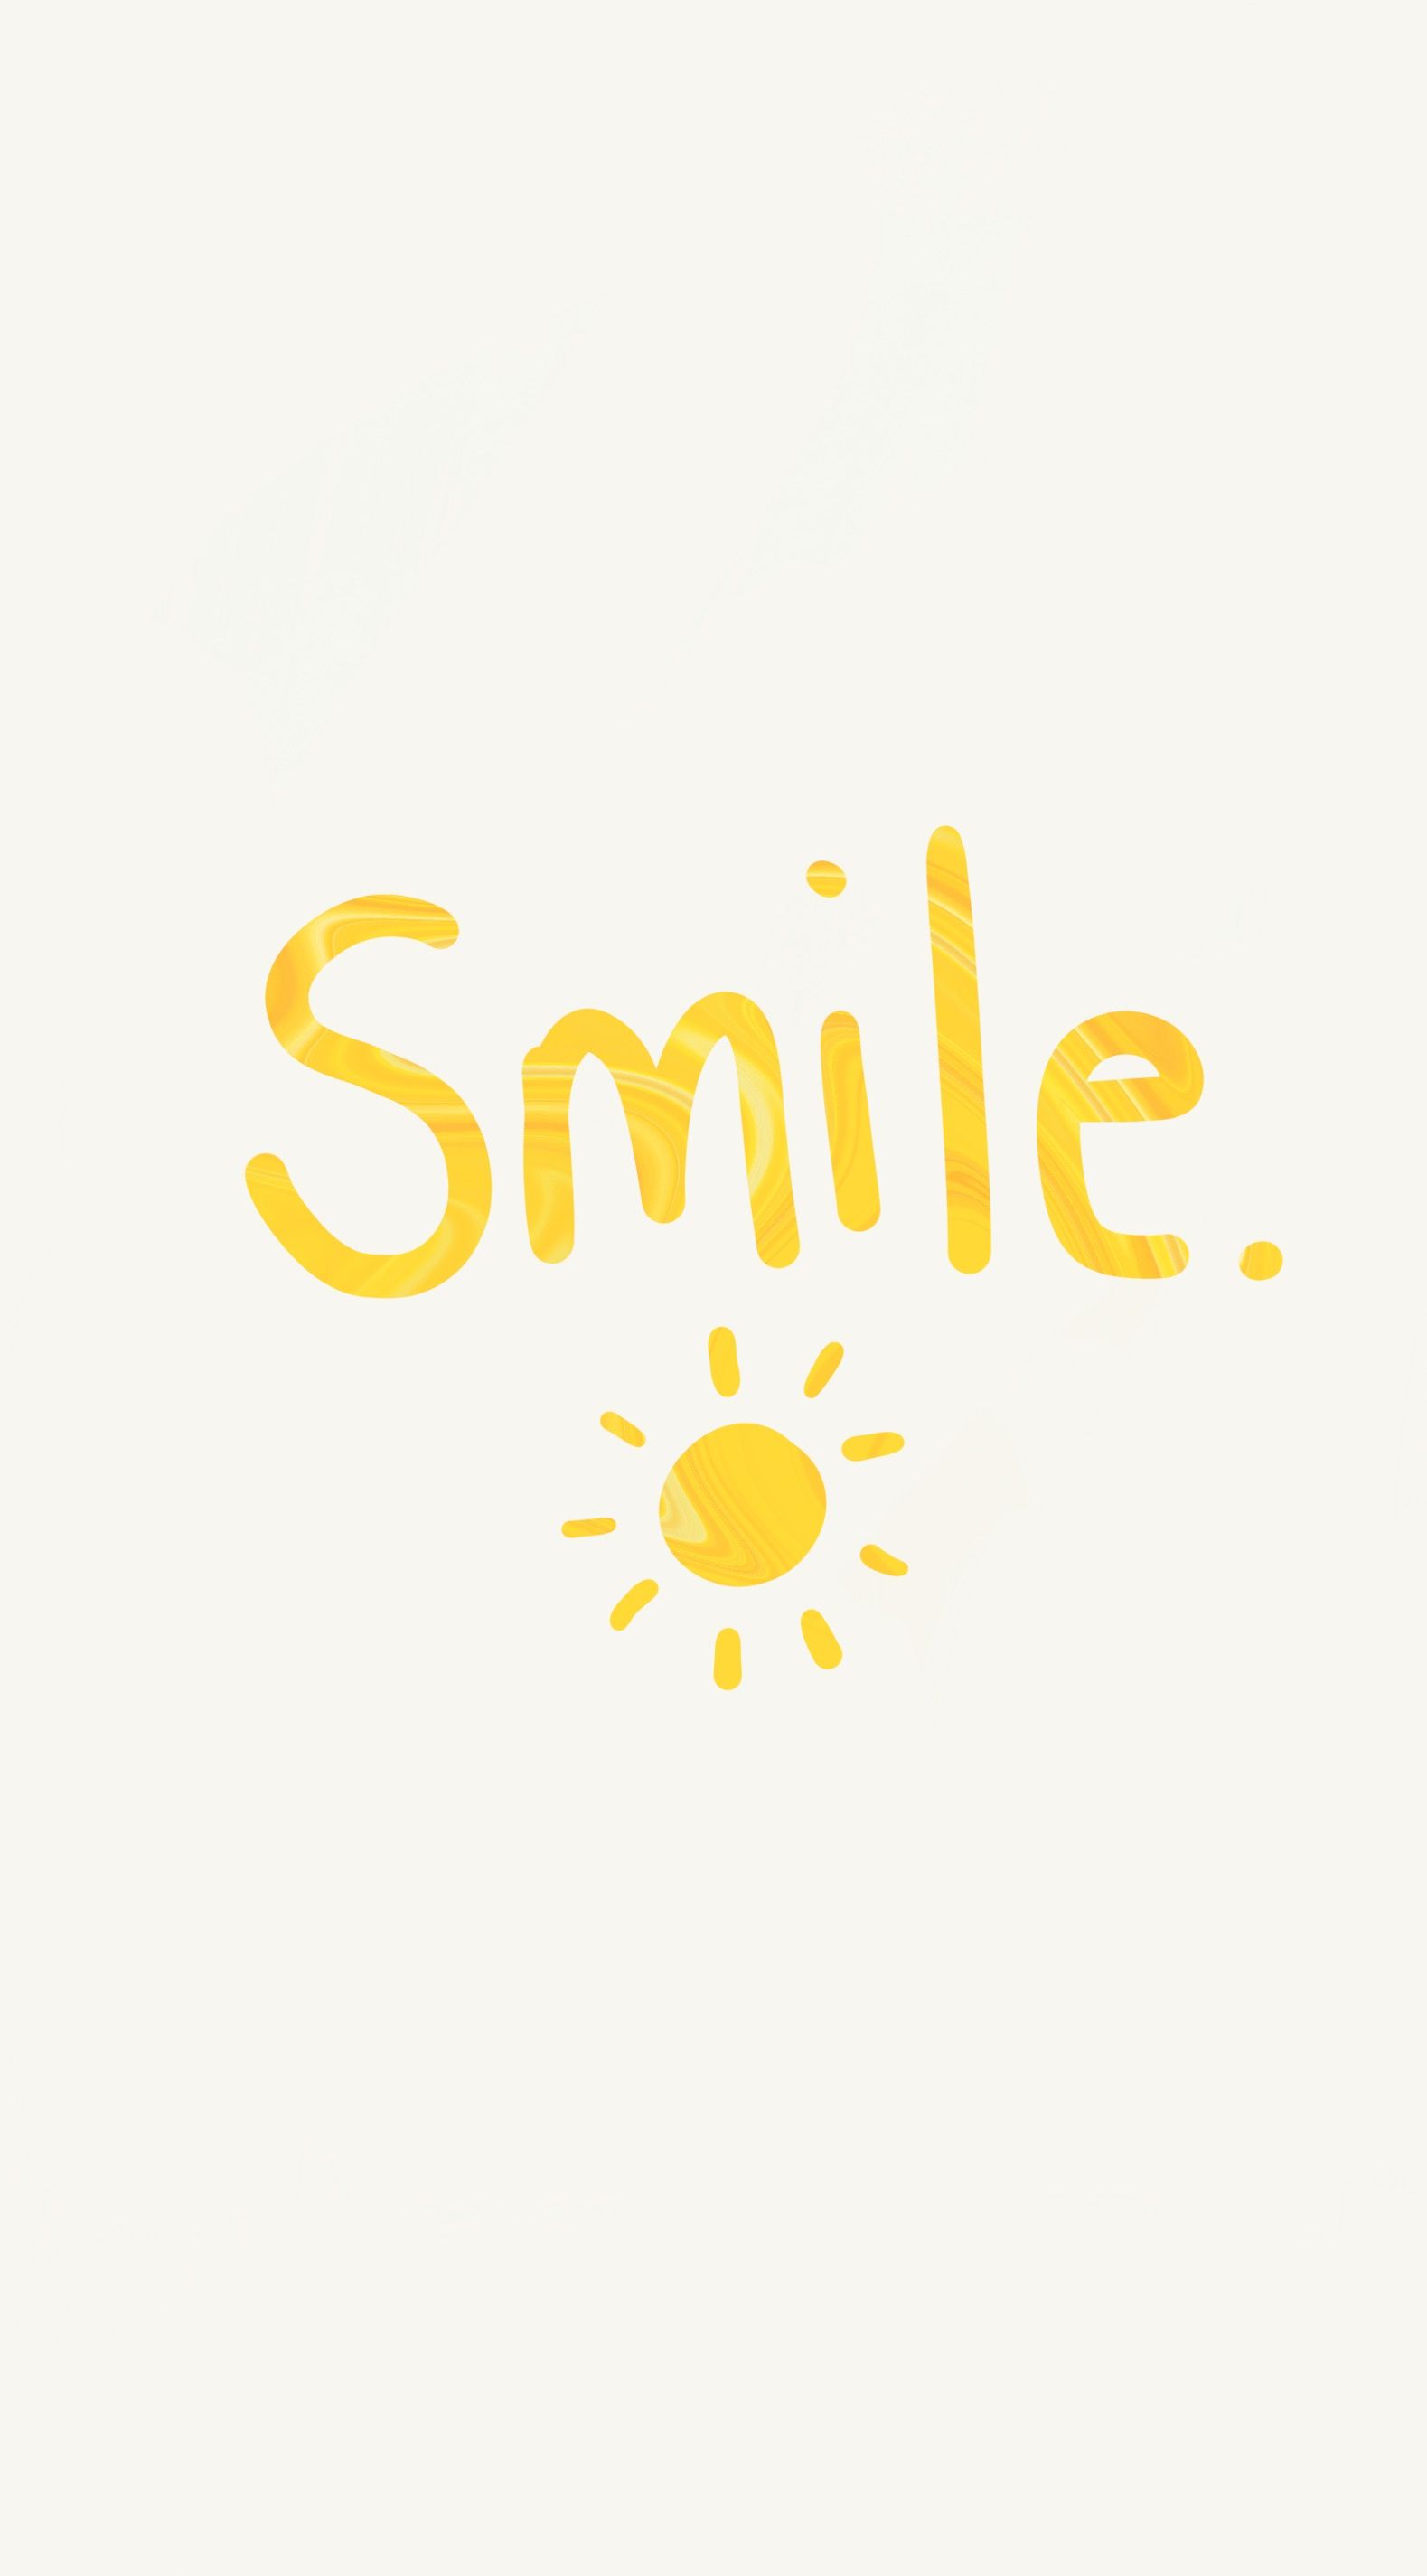 Inverted Smile Wallpaper. Cute wallpaper for phone, Happy wallpaper, Smile wallpaper